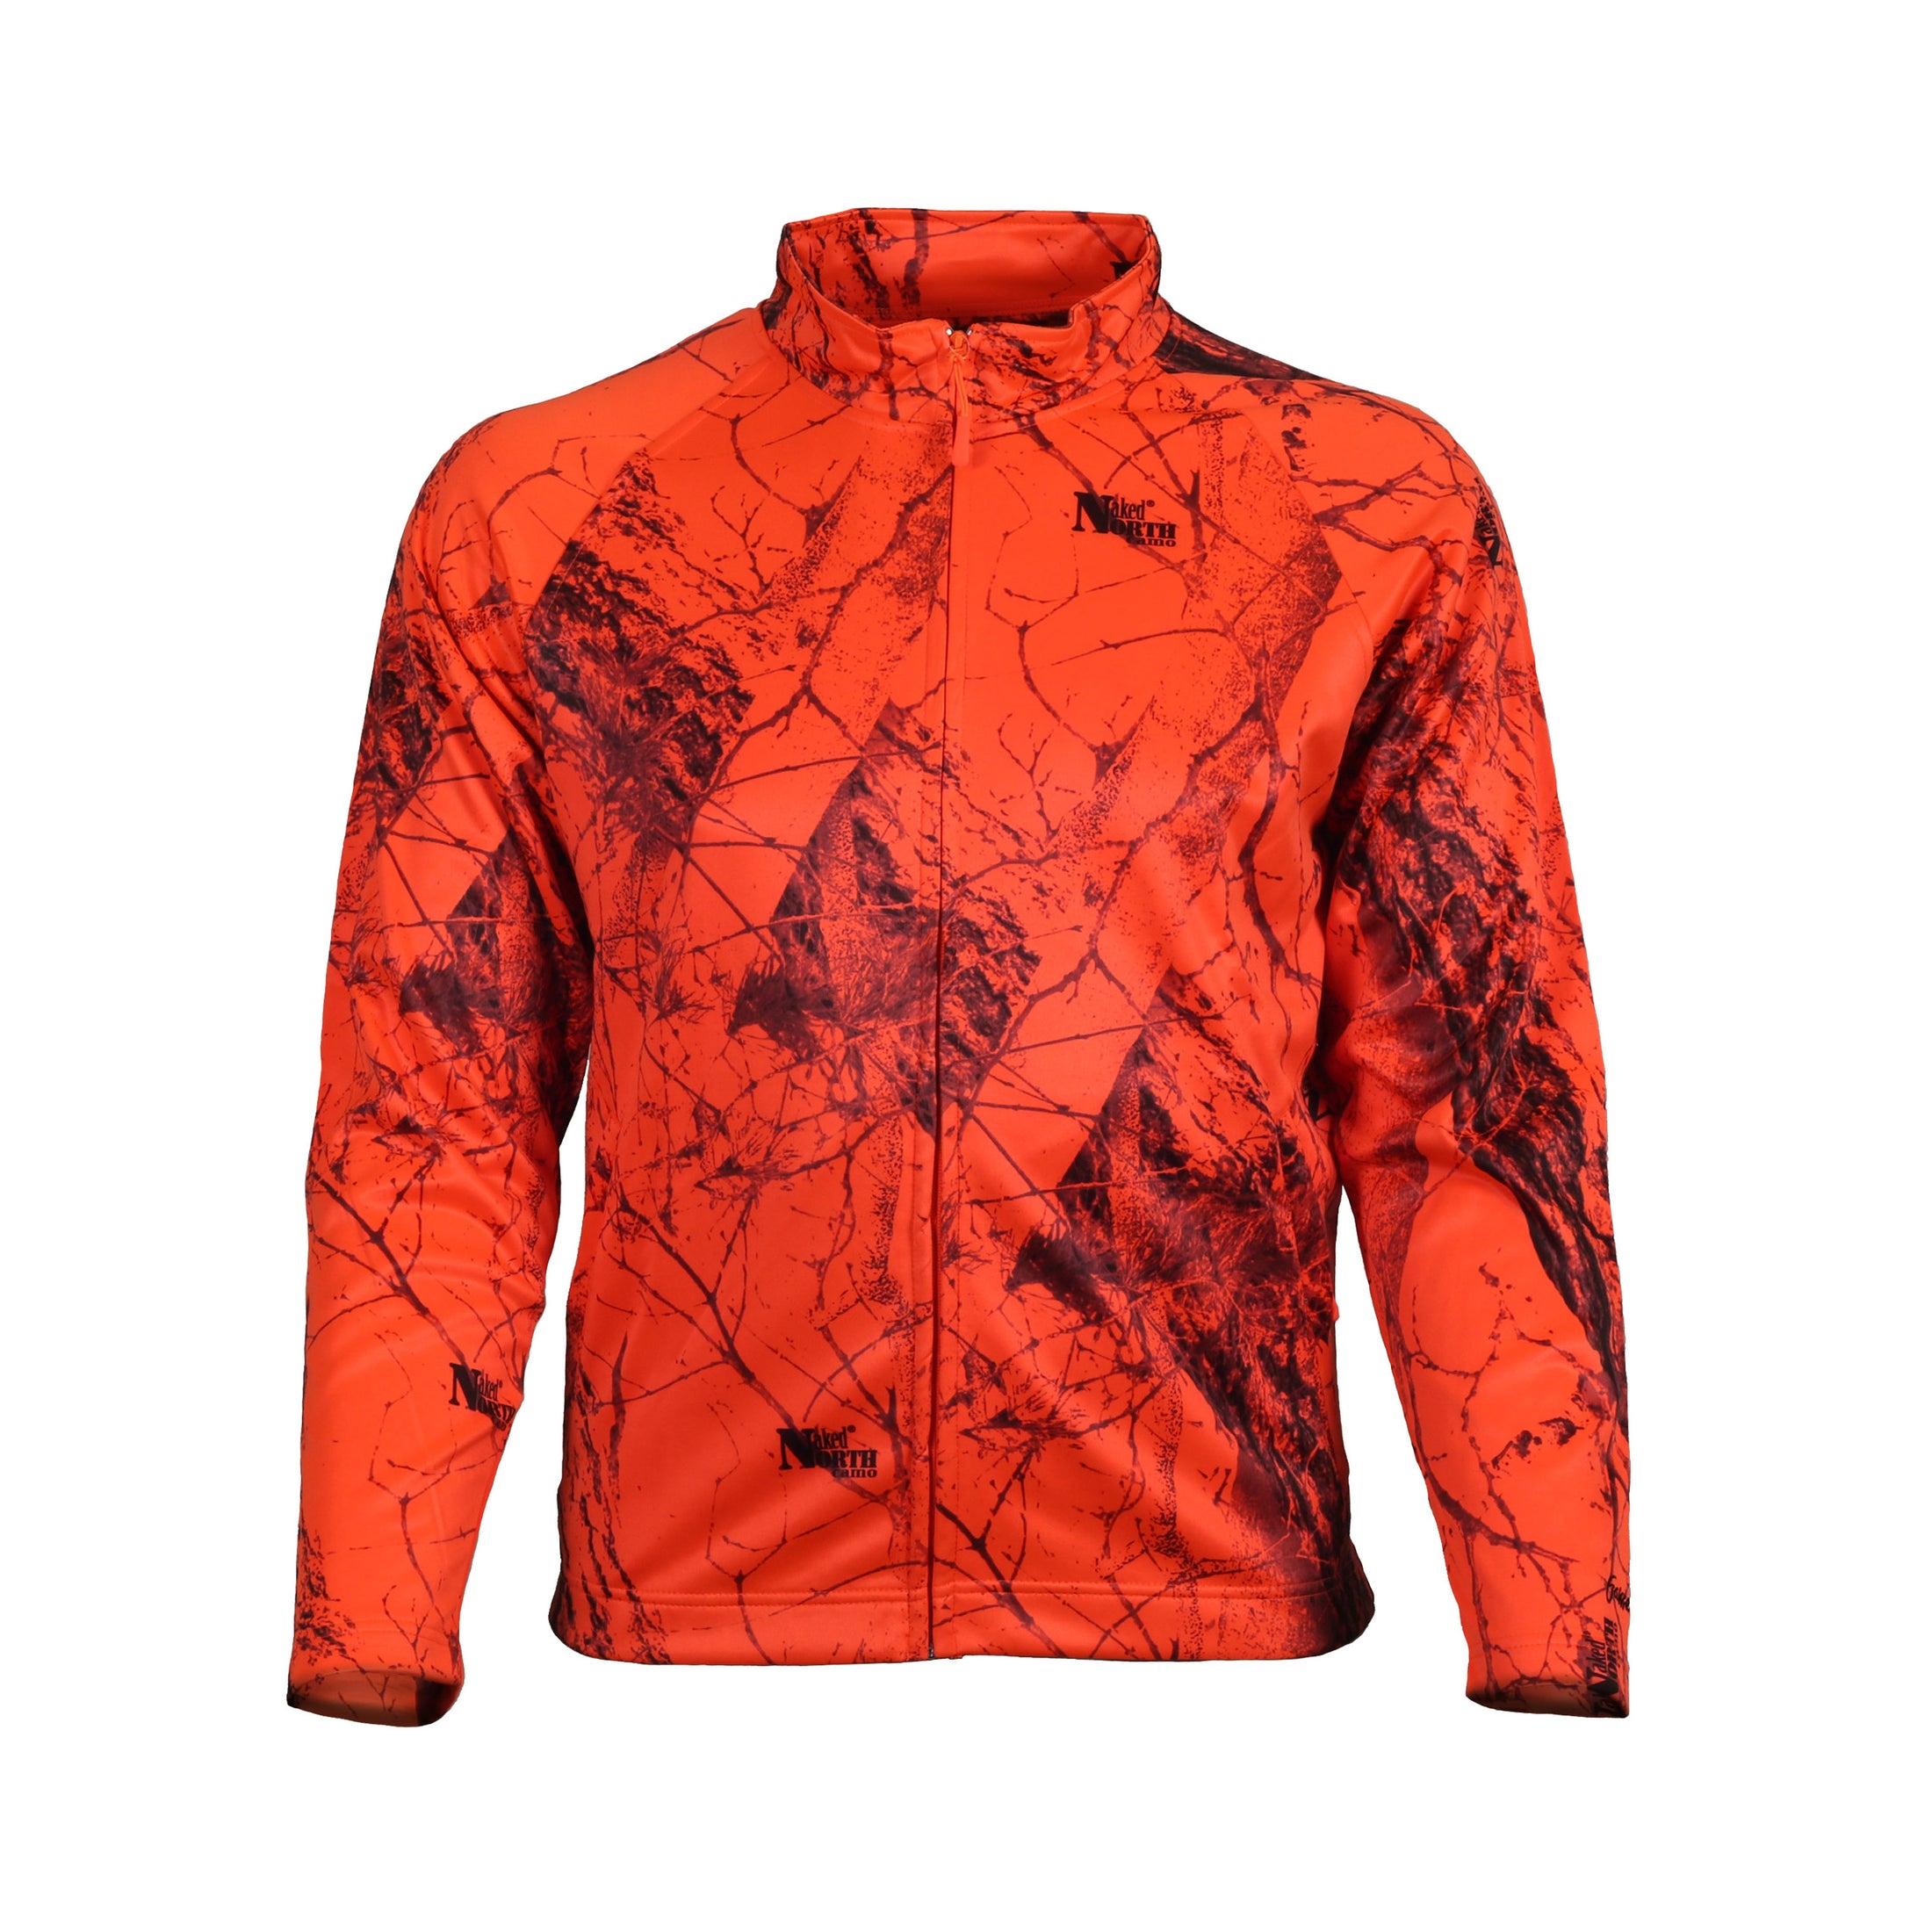 gamehide Hunt Camp Fleece Jacket front (naked north blaze orange camo)